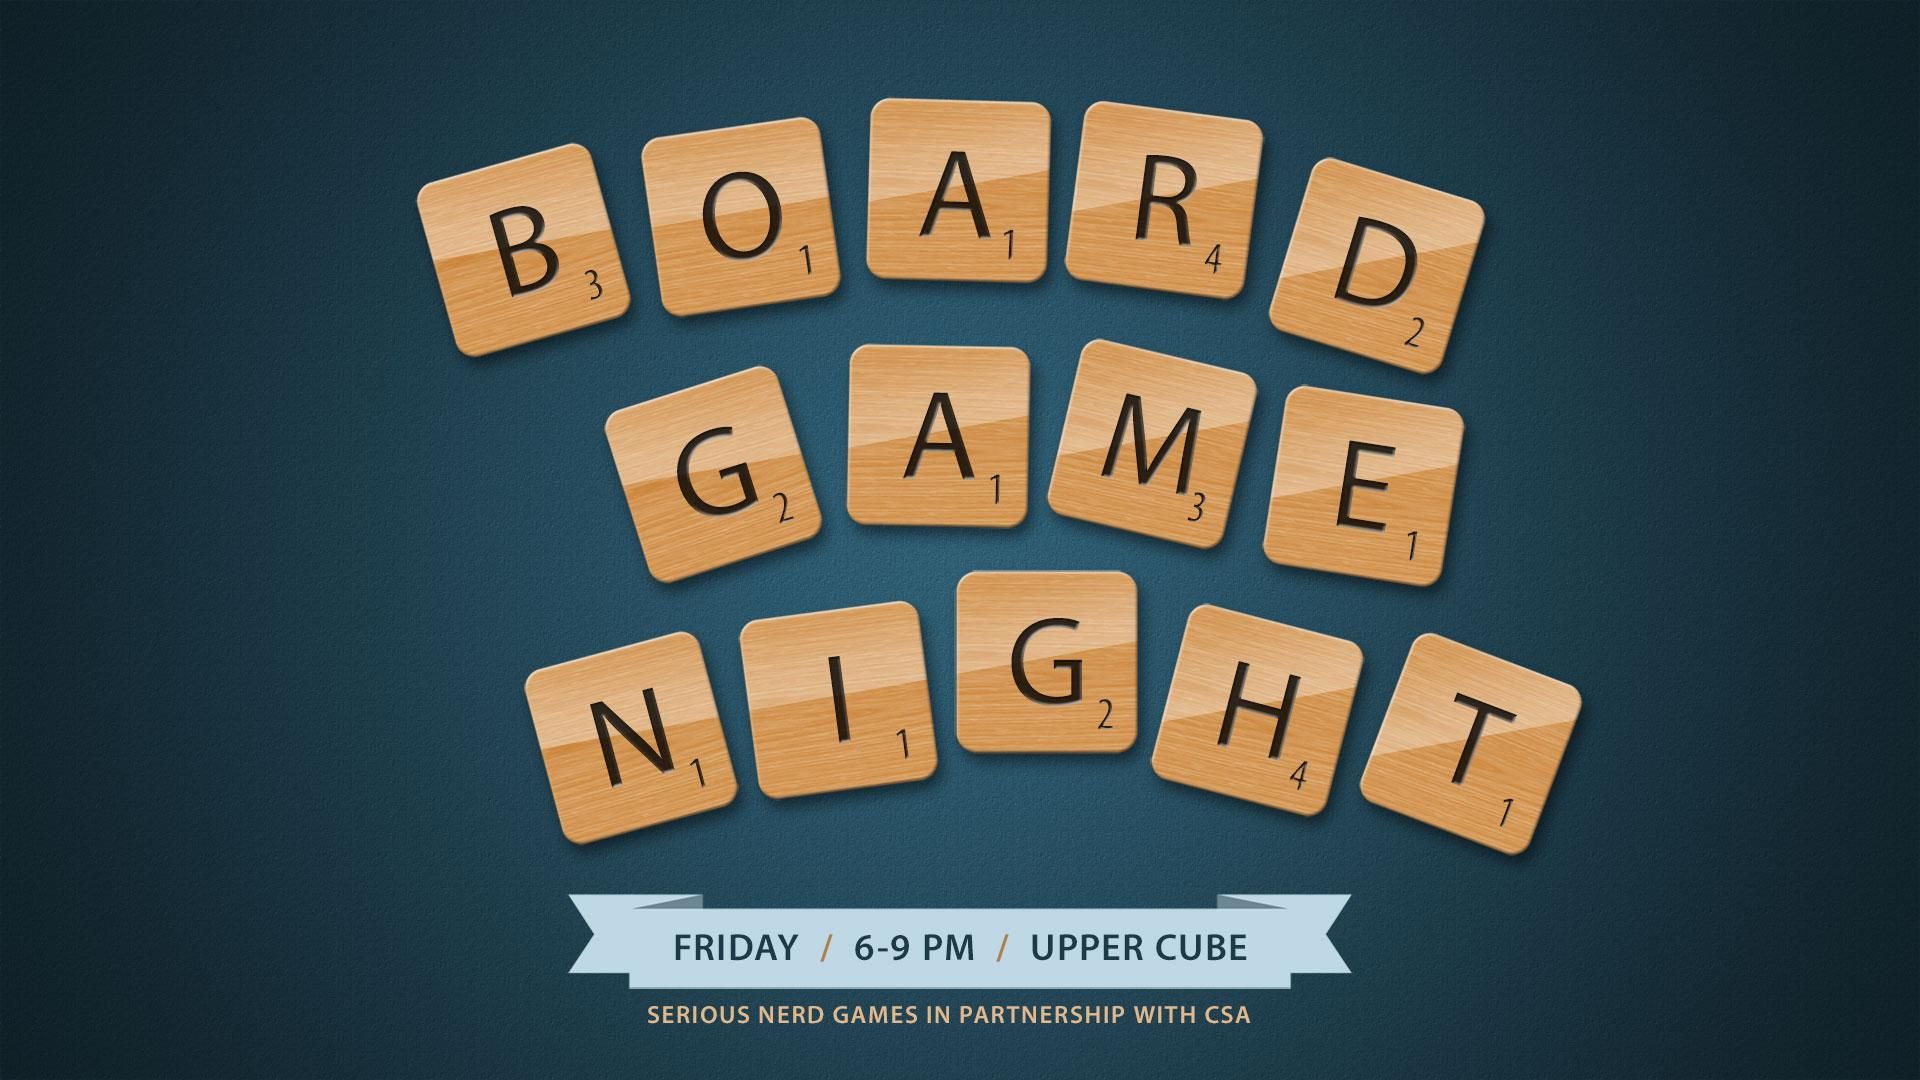 Board Game Night graphic